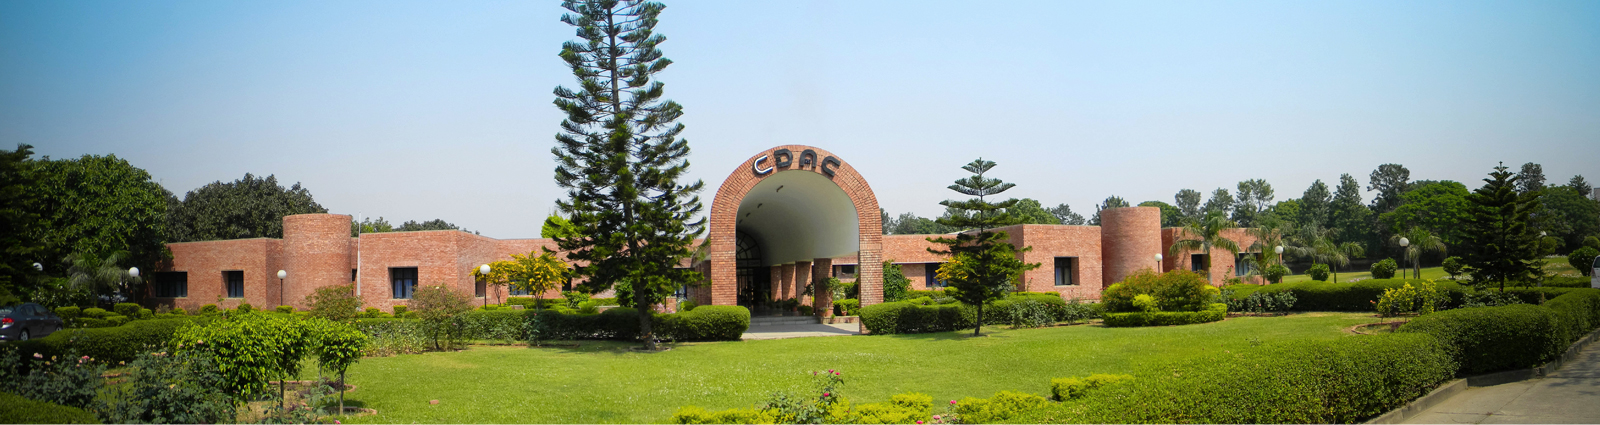 Centre for Development of Advanced Computing, Mohali Image